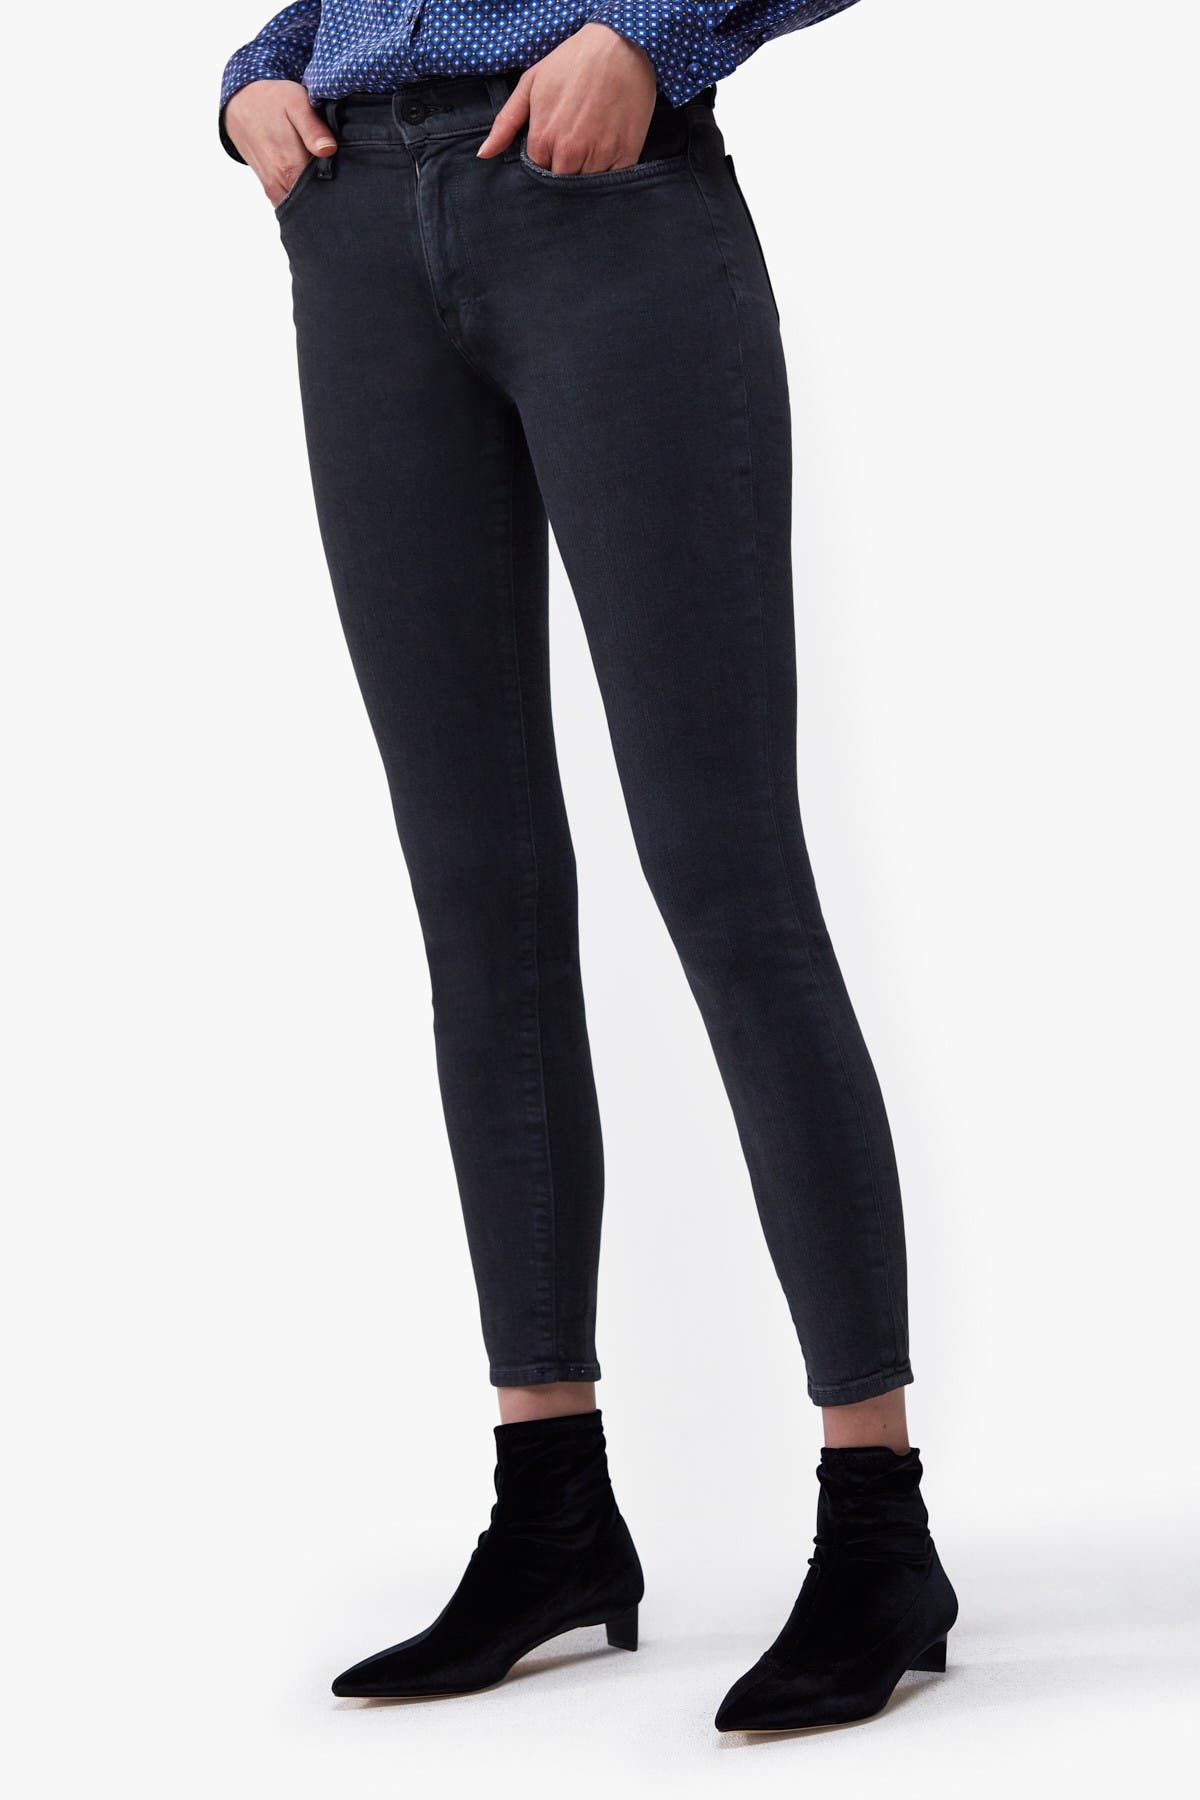 Baldwin Karlie Jeans In Grey